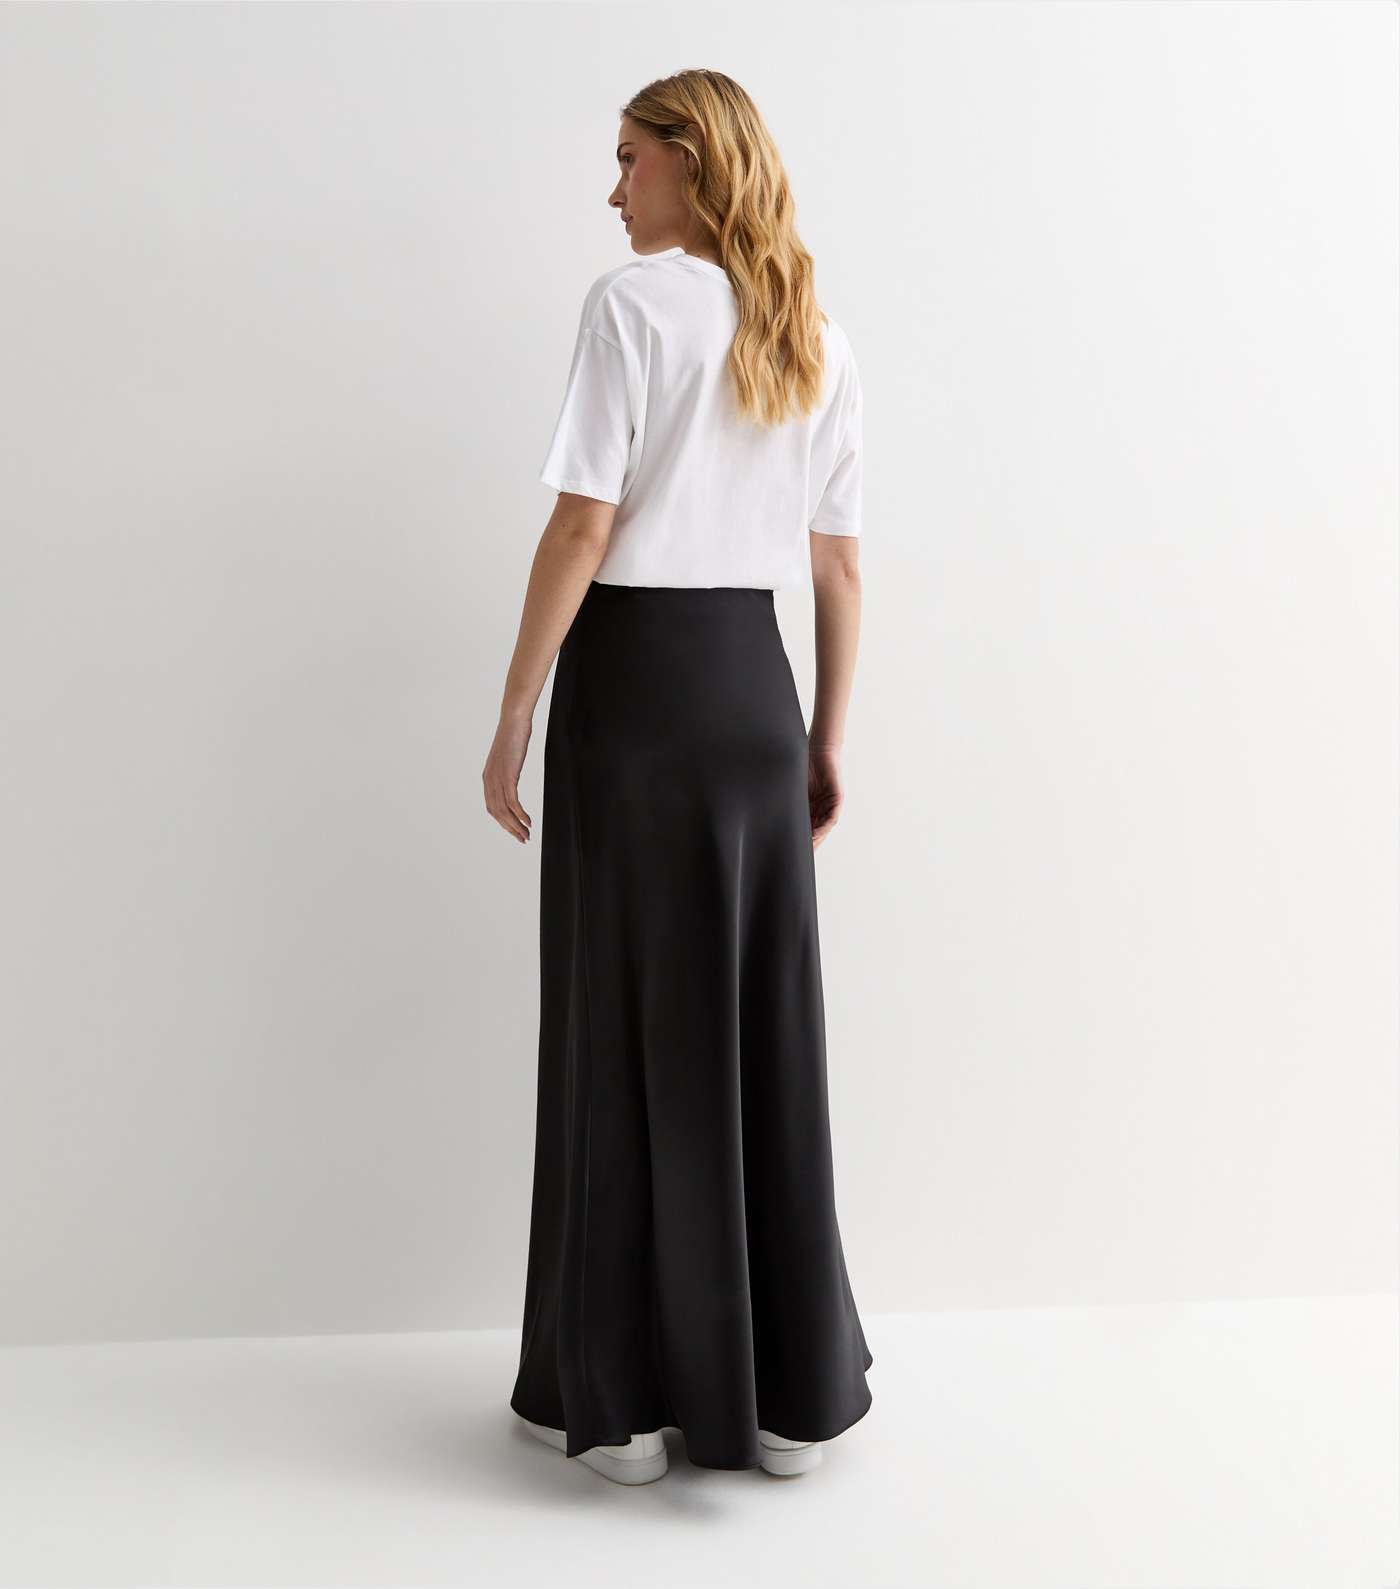 Gini London Black Satin Bias Cut Maxi Skirt Image 4